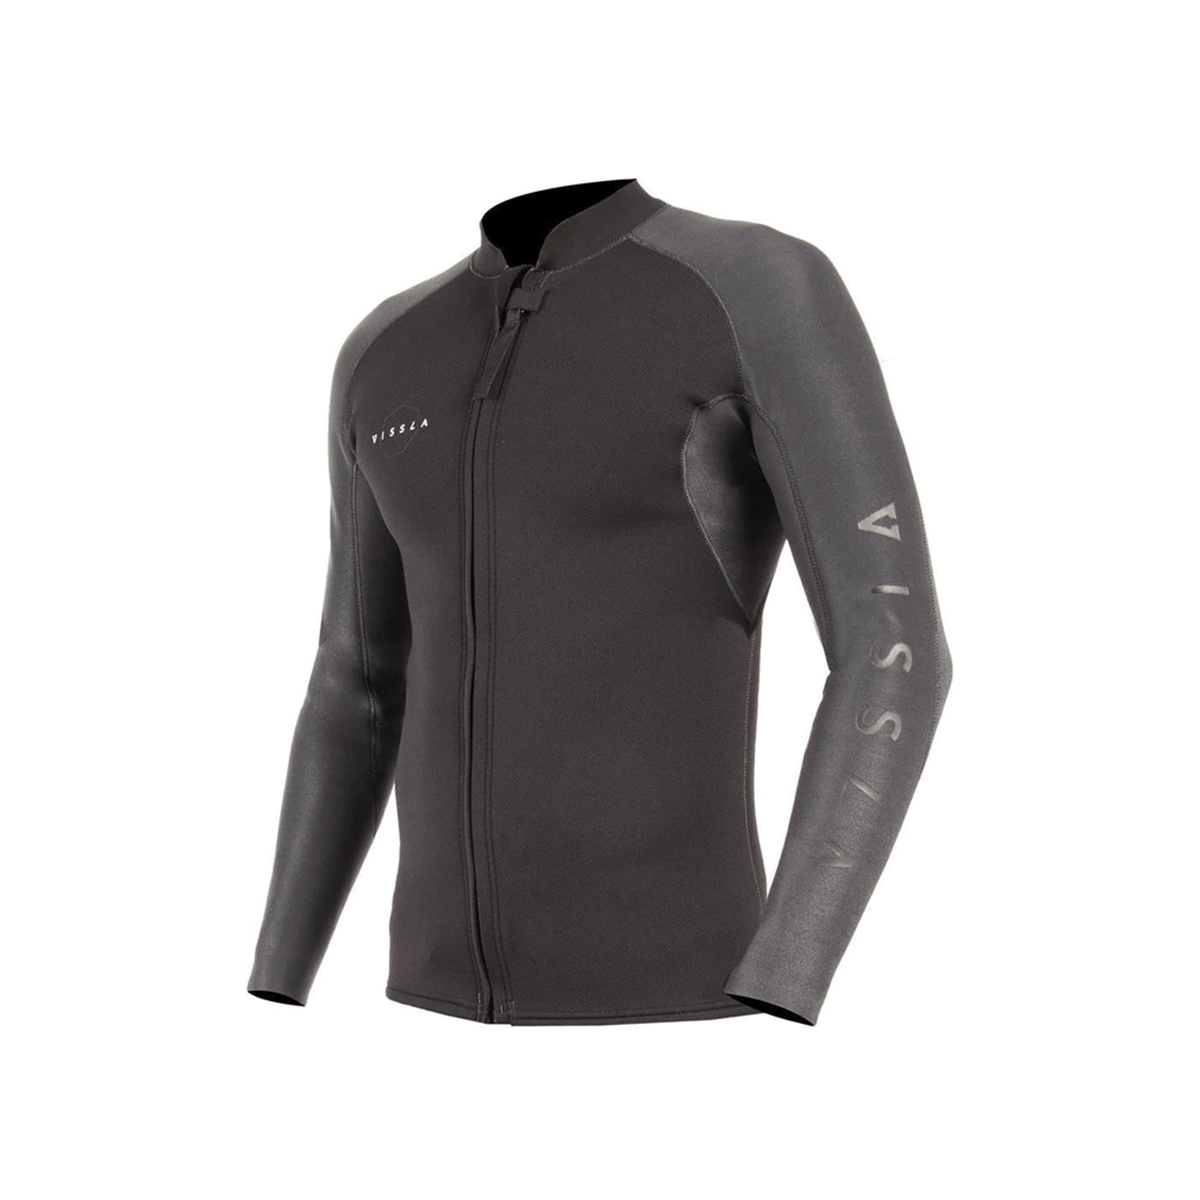 Vissla High Seas 2mm Front Zip Wetsuit Jacket in Charcoal - BoardCo